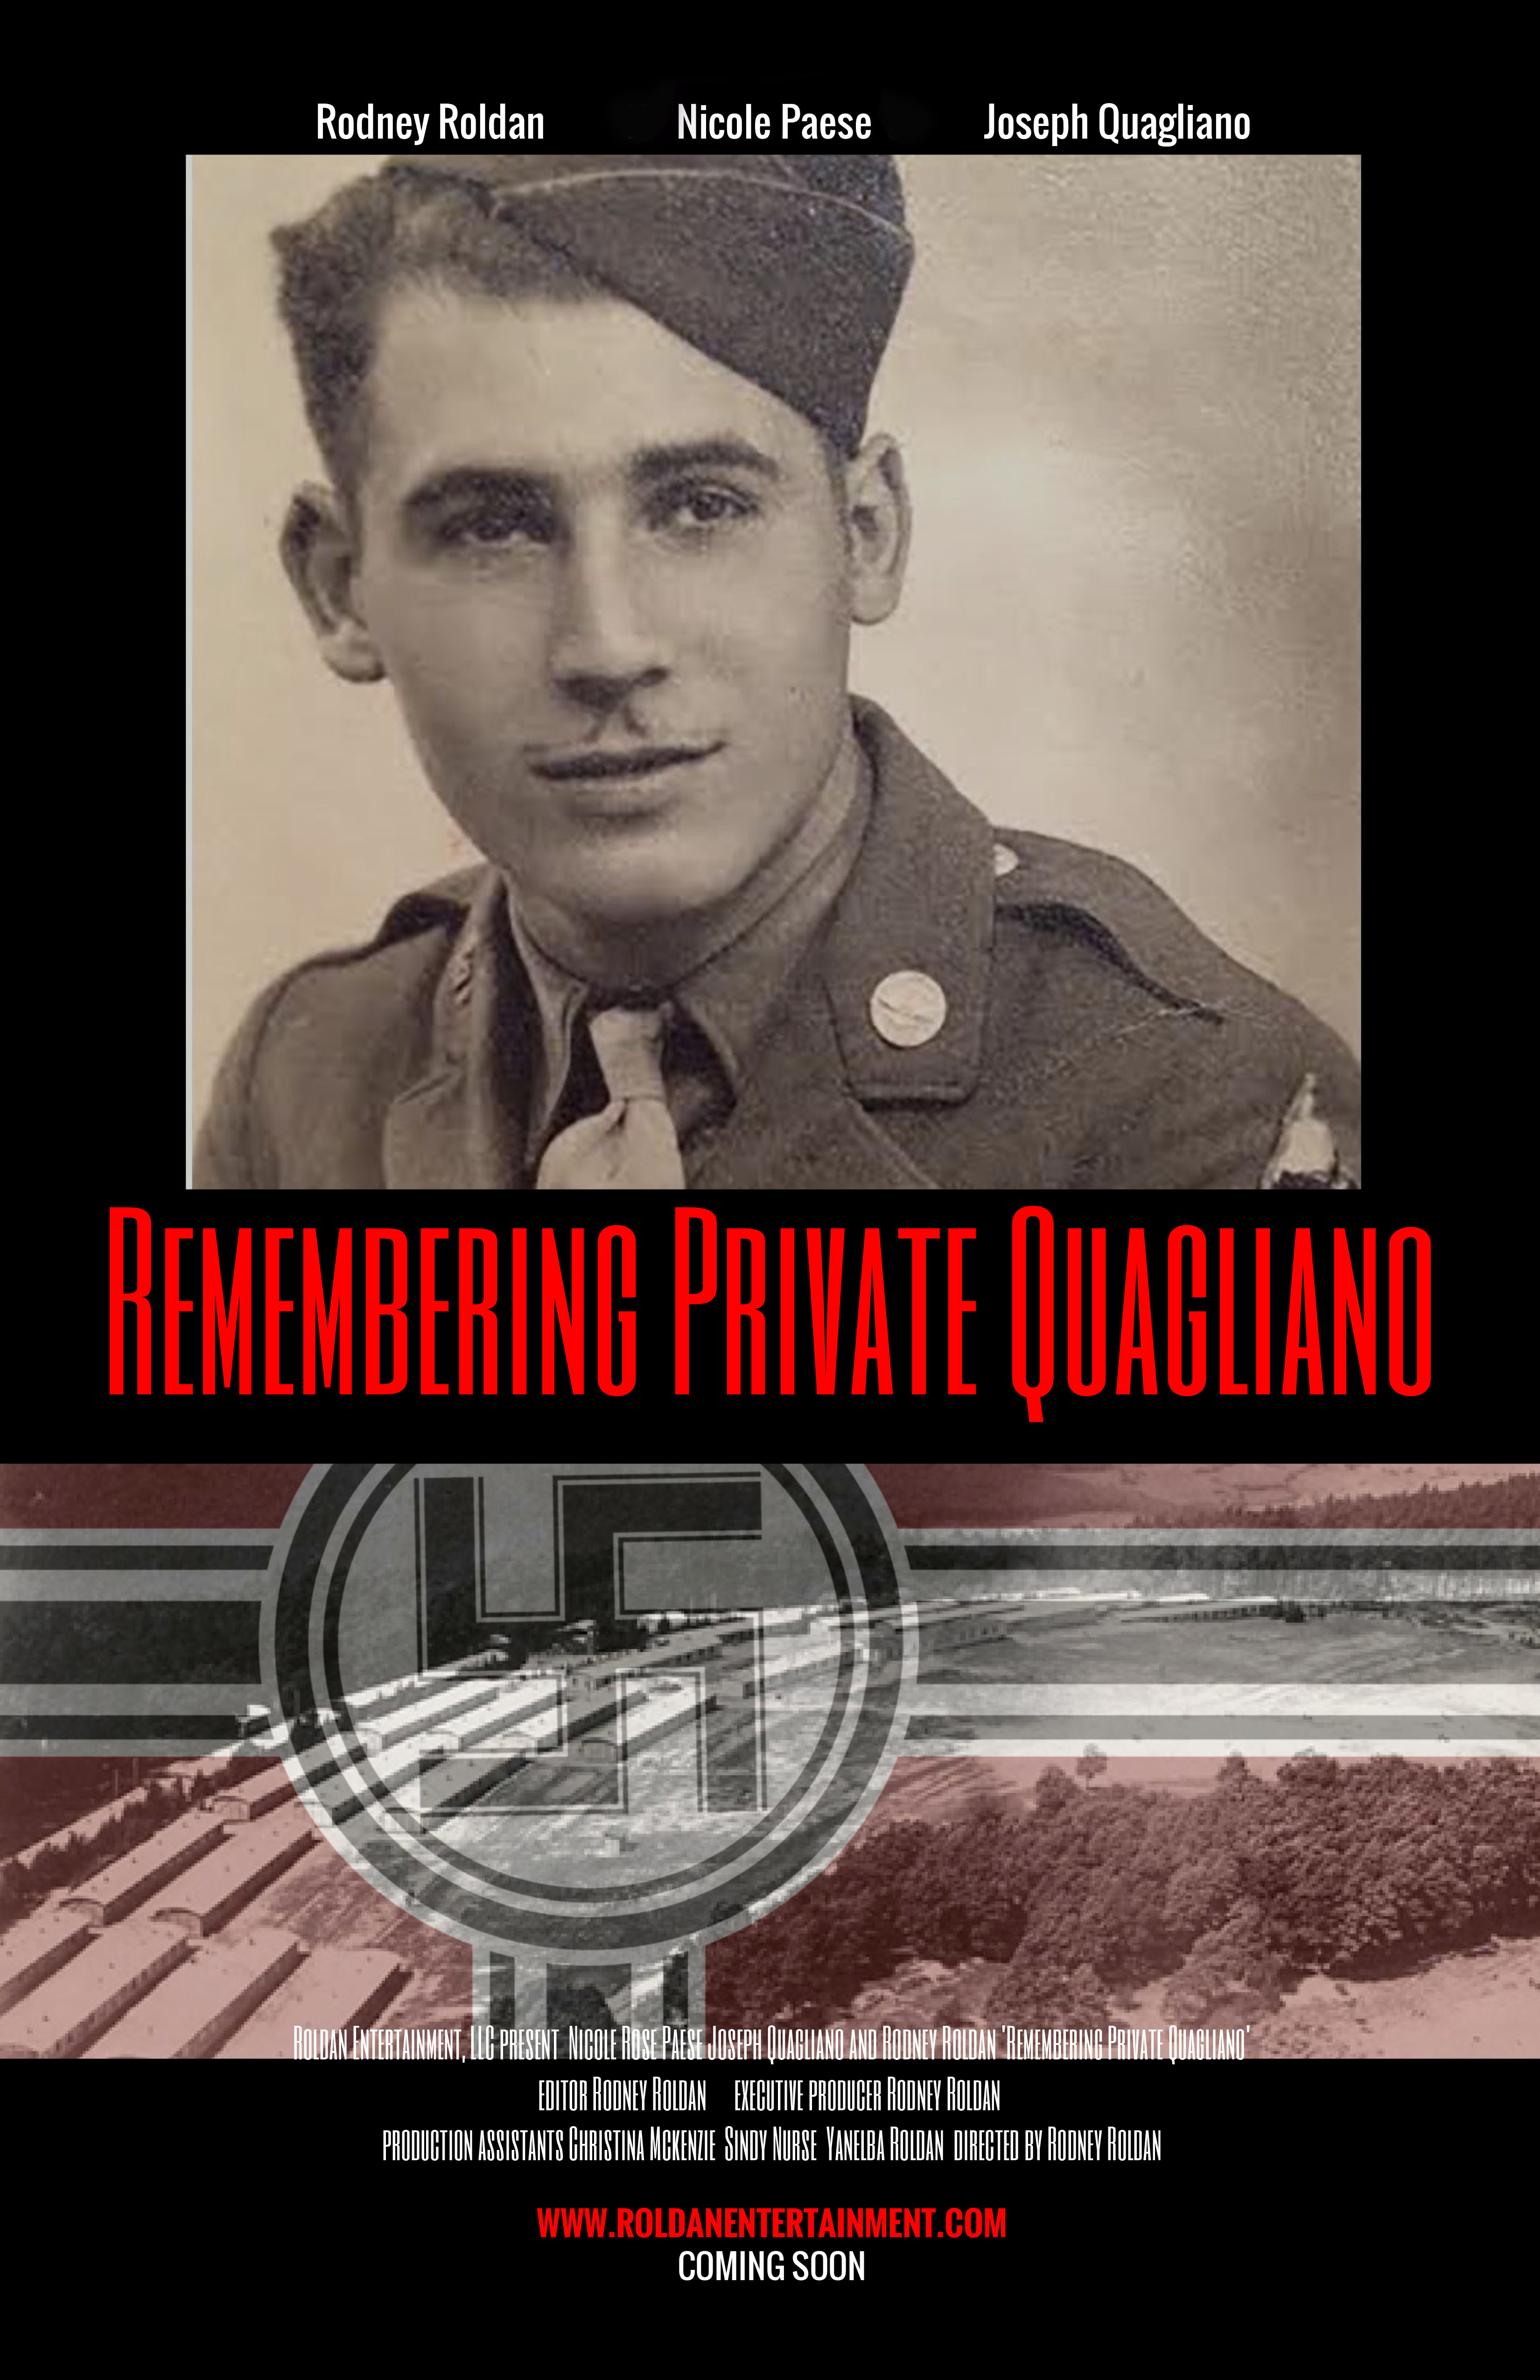 Remembering Private Quagliano - Official Poster